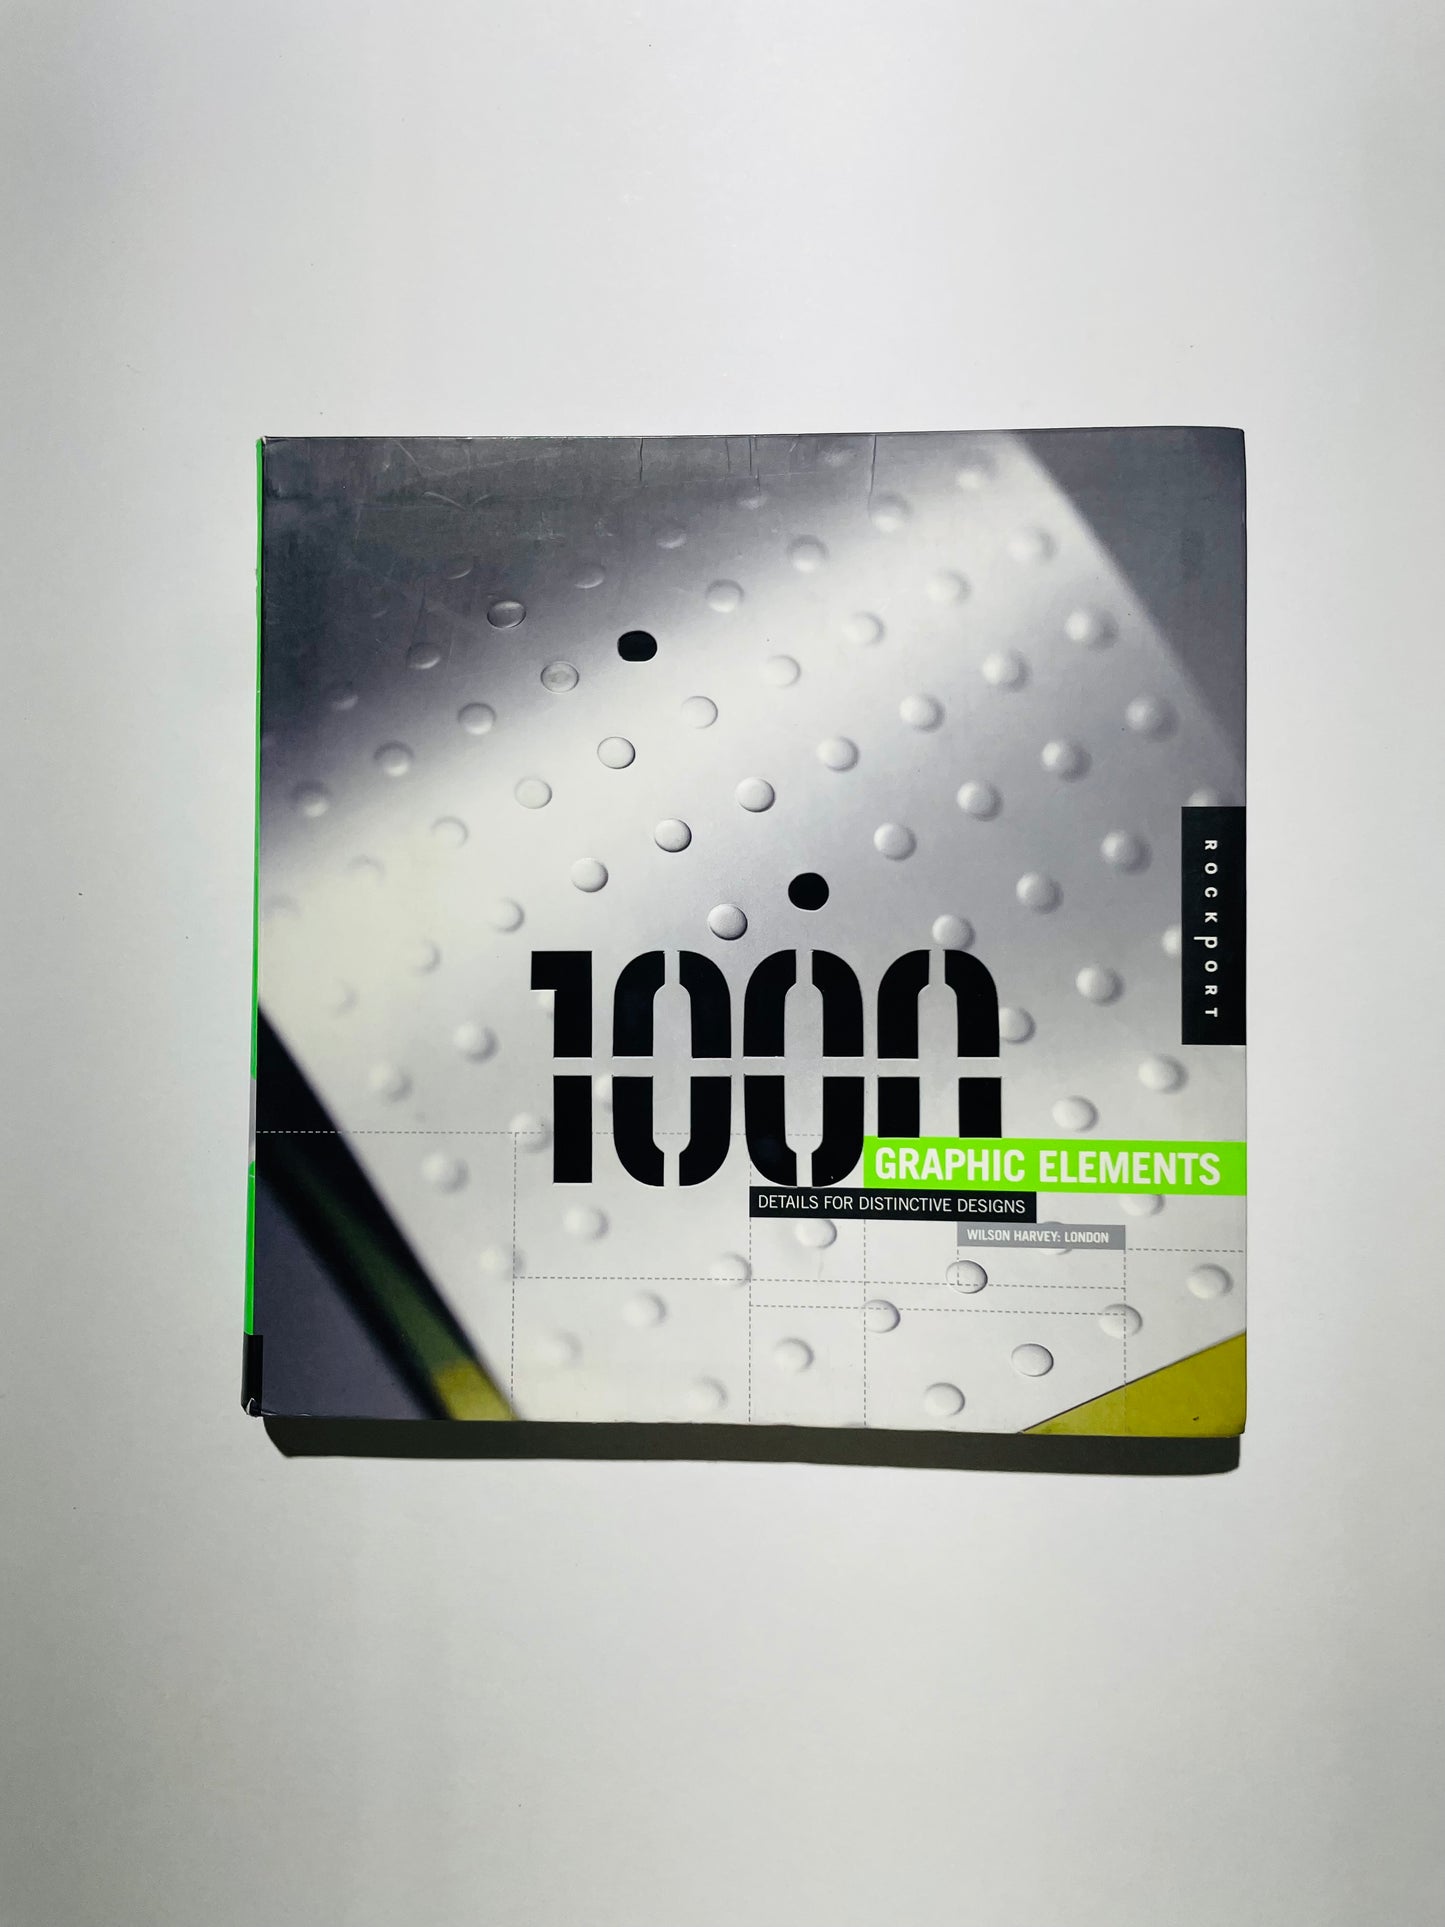 1000 Graphic Elements: Special Details for Distinctive Designs